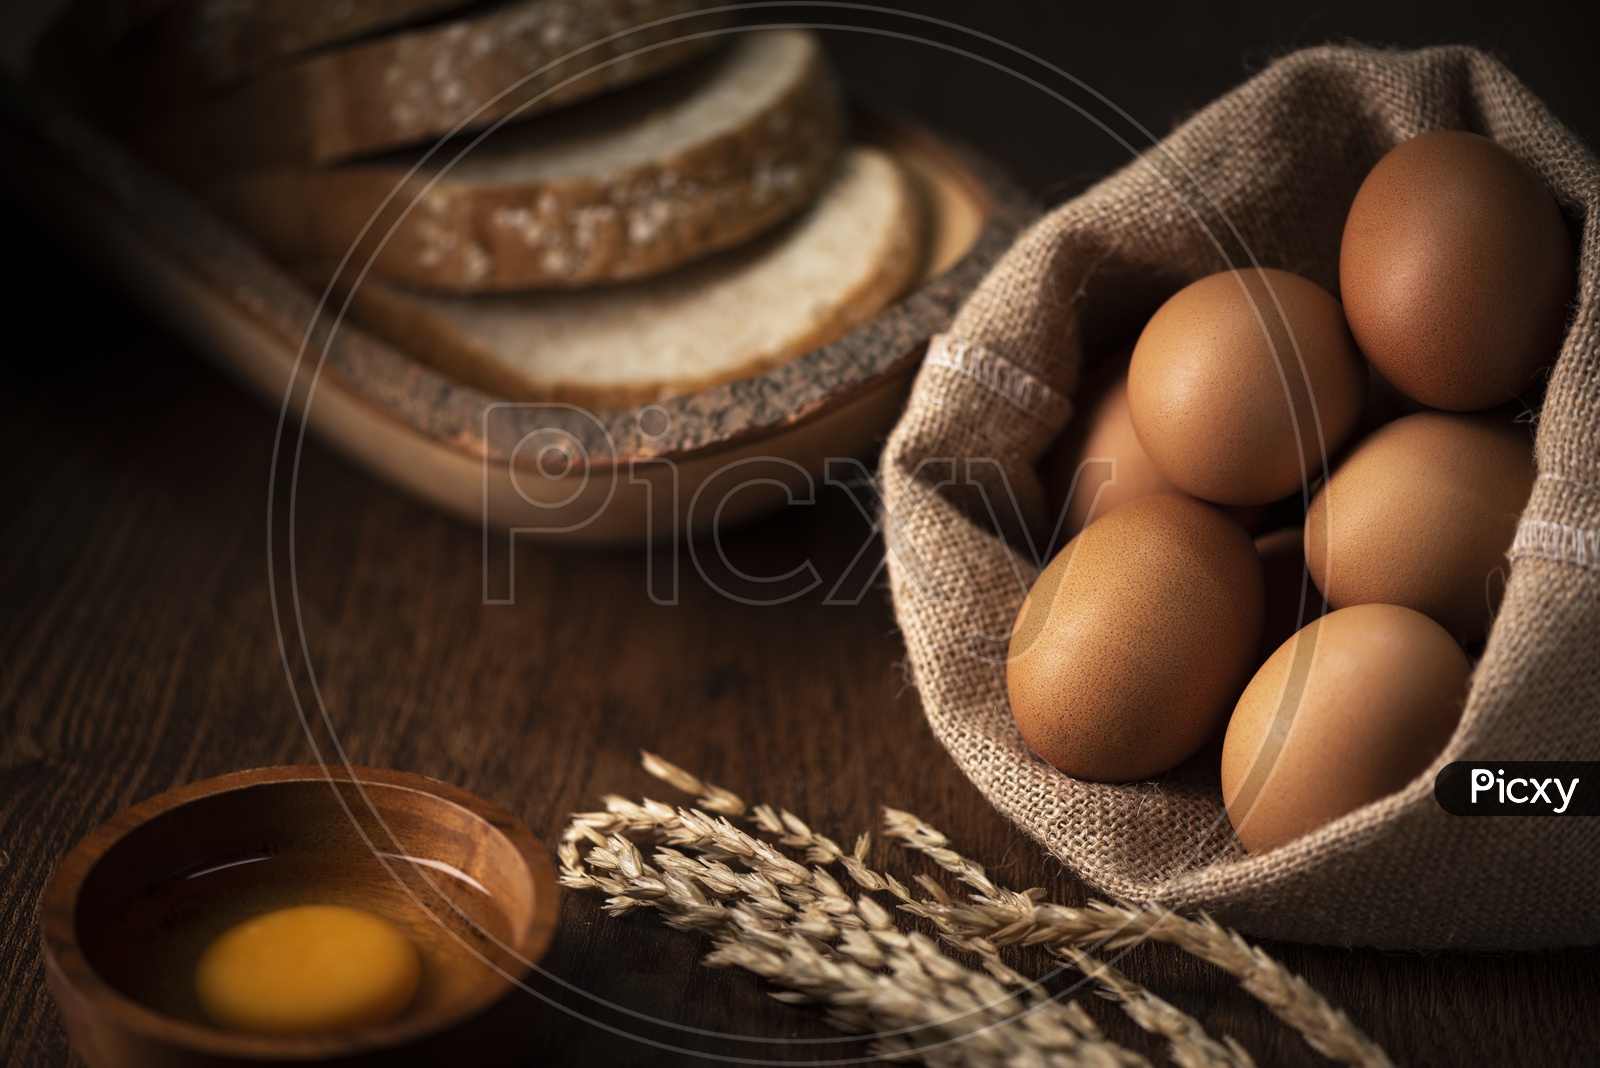 Brown Eggs in Sack, Broken Egg with yolk in Background